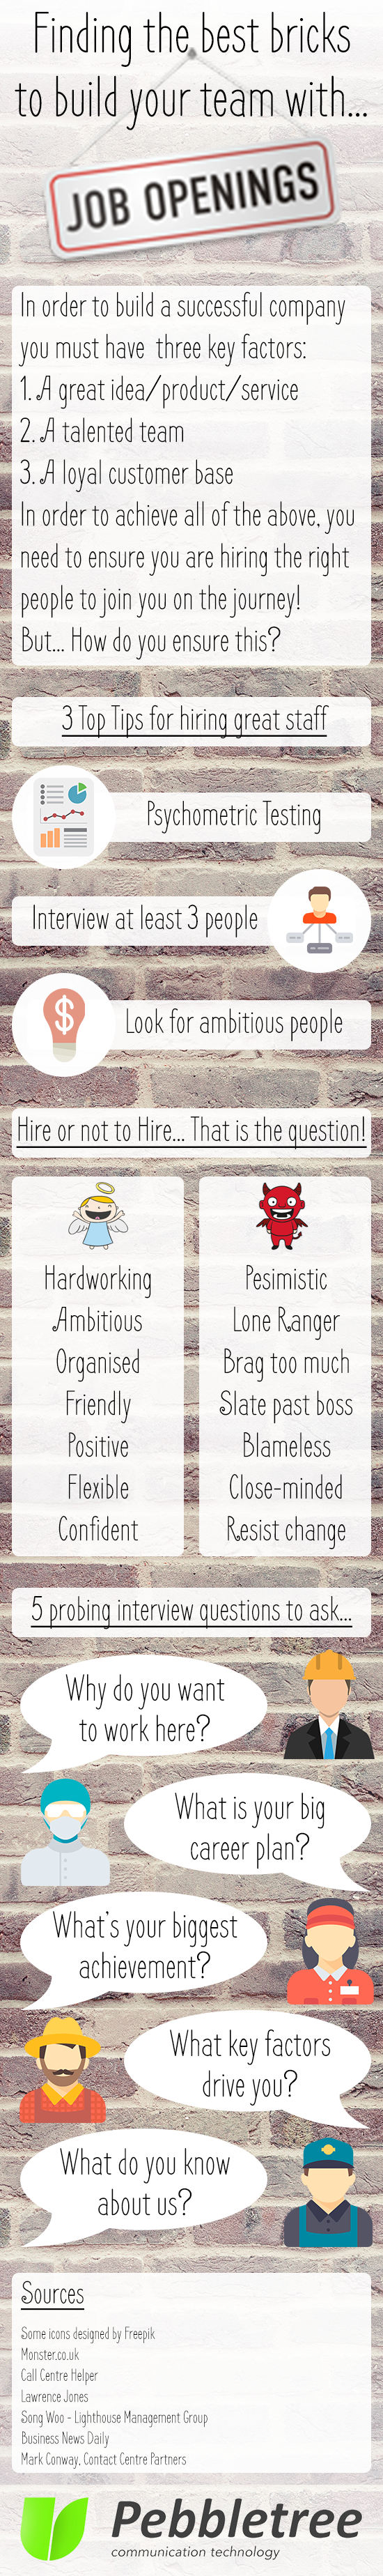 Recruitment infographic